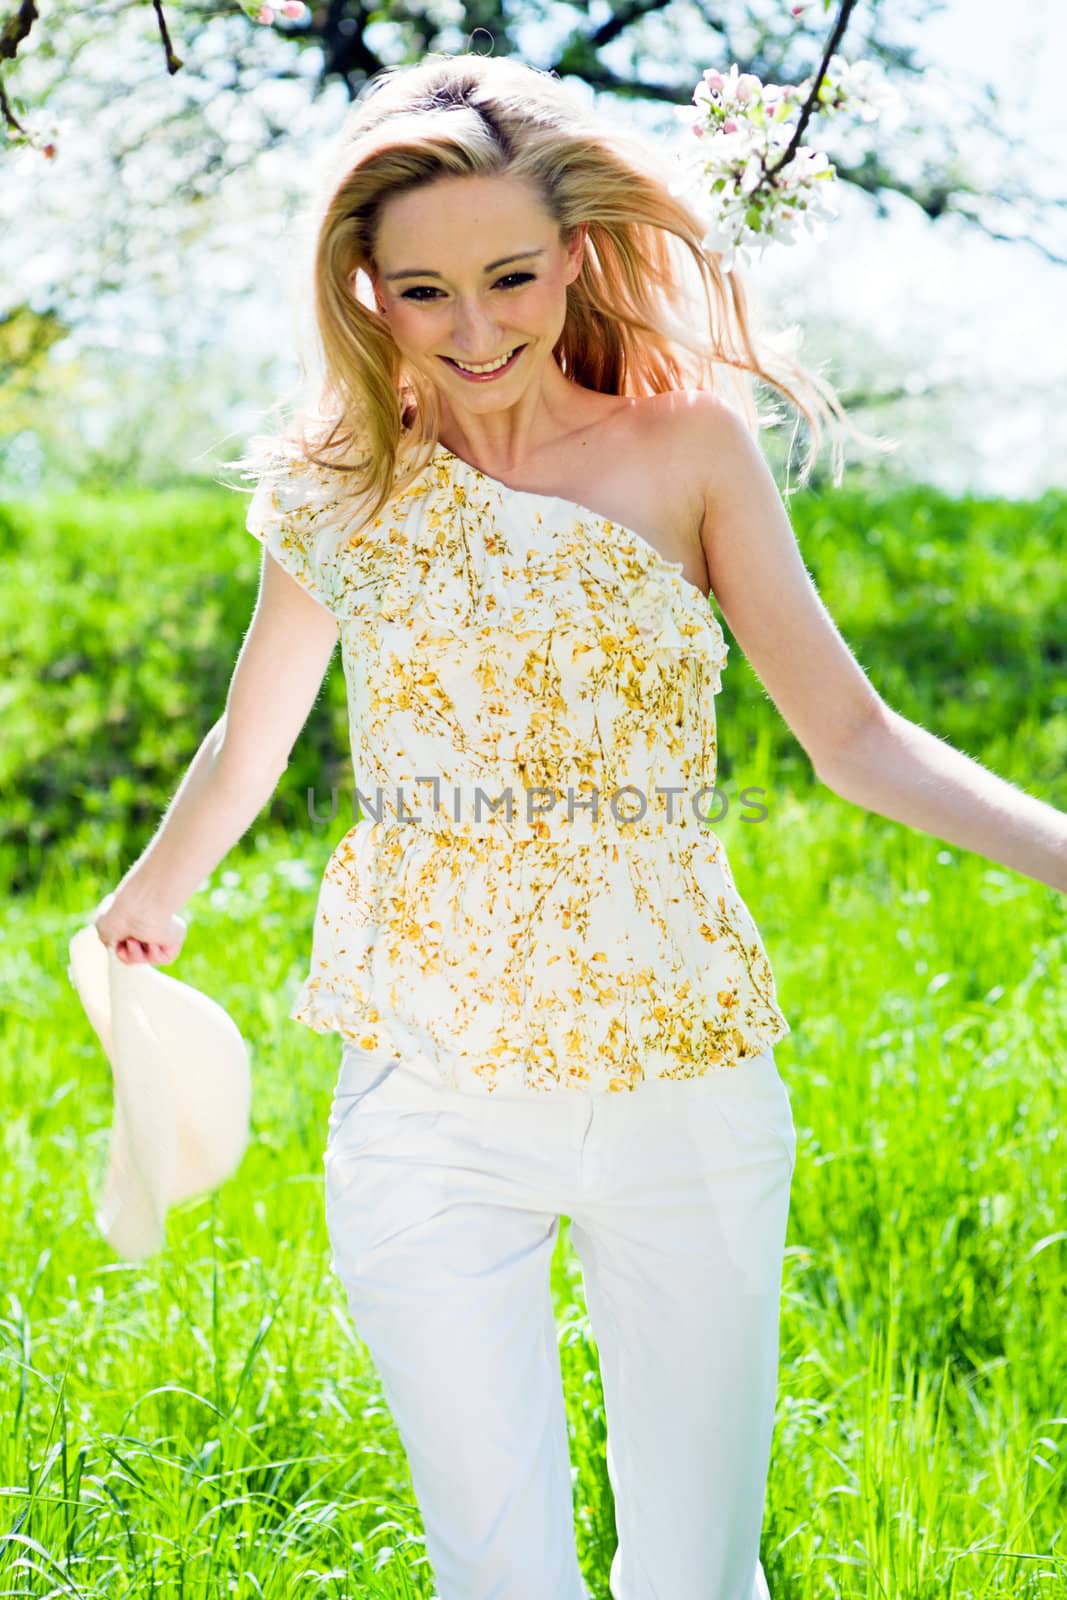 beautiful young girl happy in summer outdoor